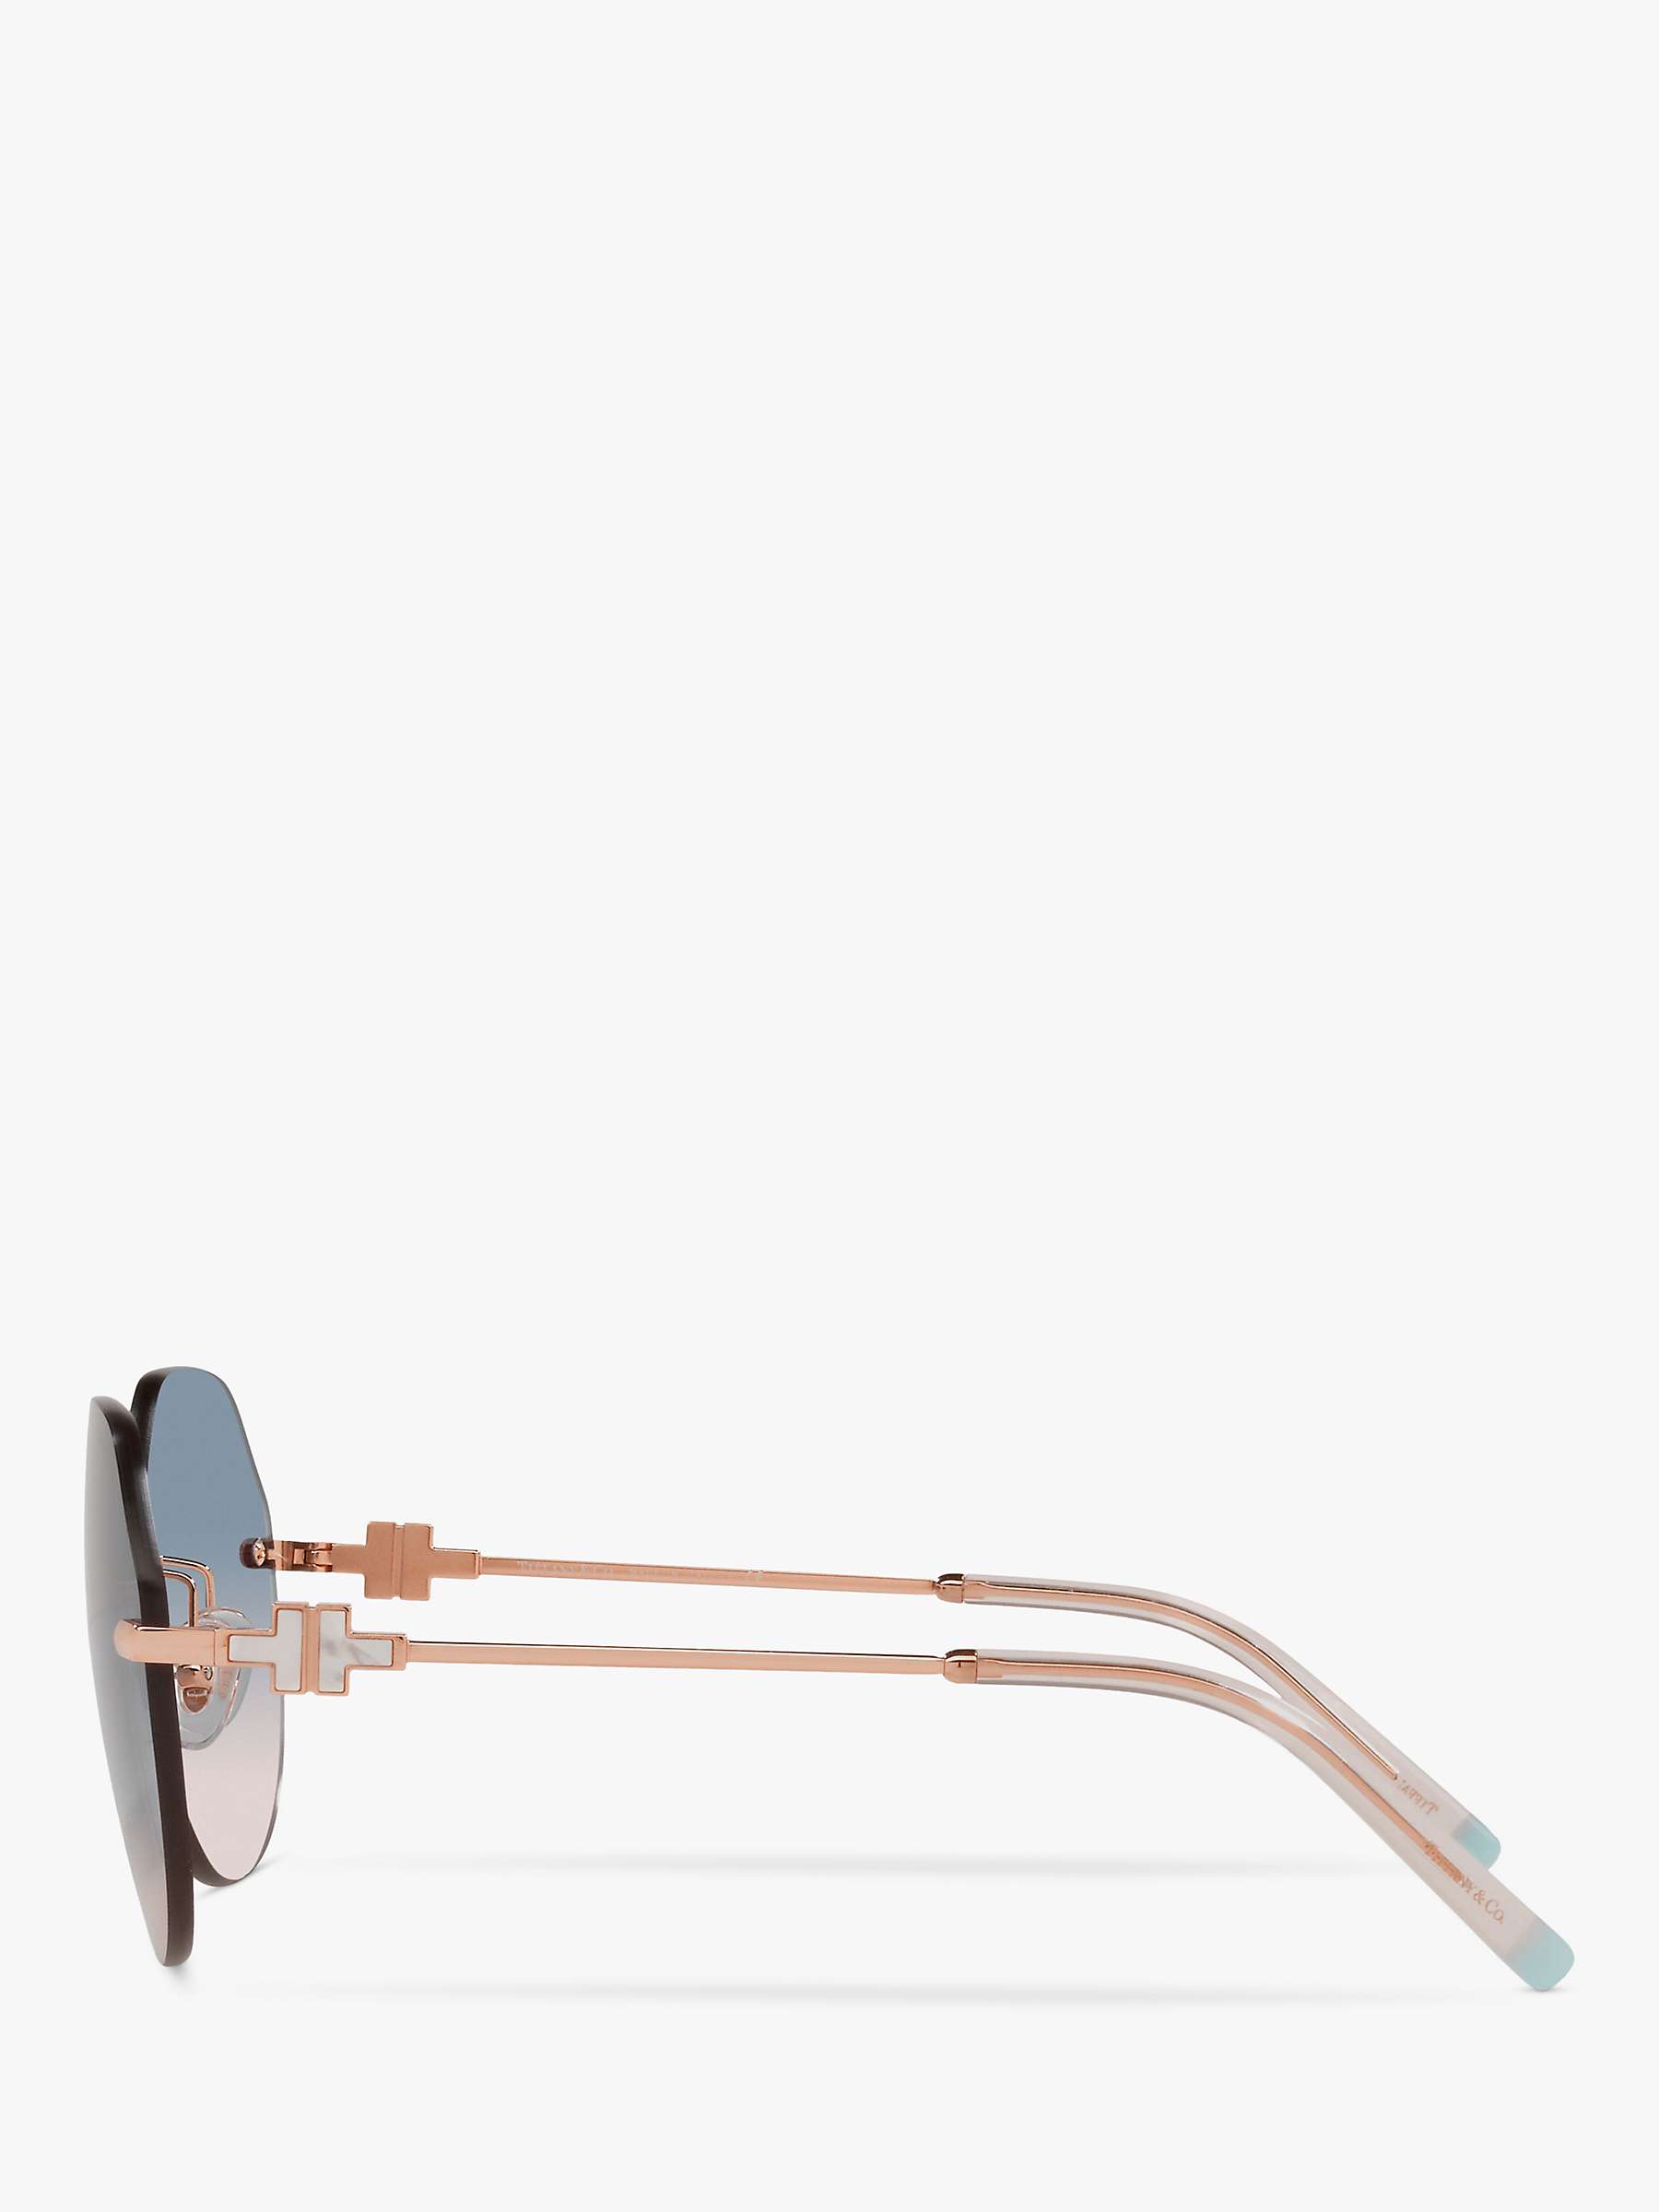 Buy Tiffany & Co TF3077 Women's Irregular Sunglasses, Rubedo Online at johnlewis.com